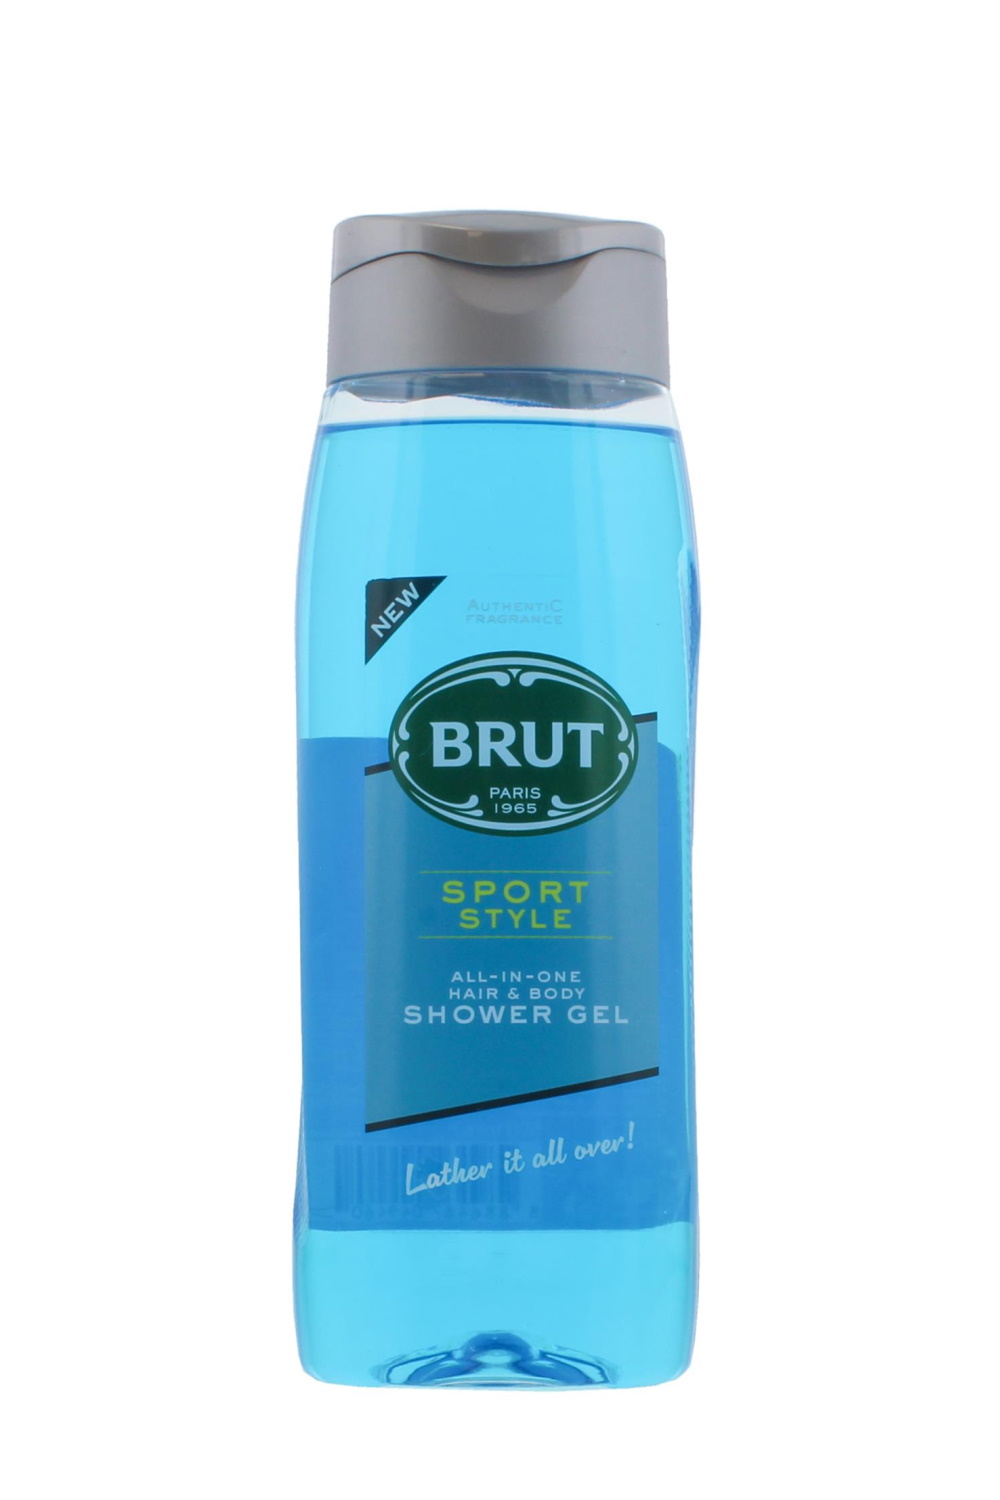 Brut Hair & Body Shower Gel – Sport Style 500ml – Stylishcare